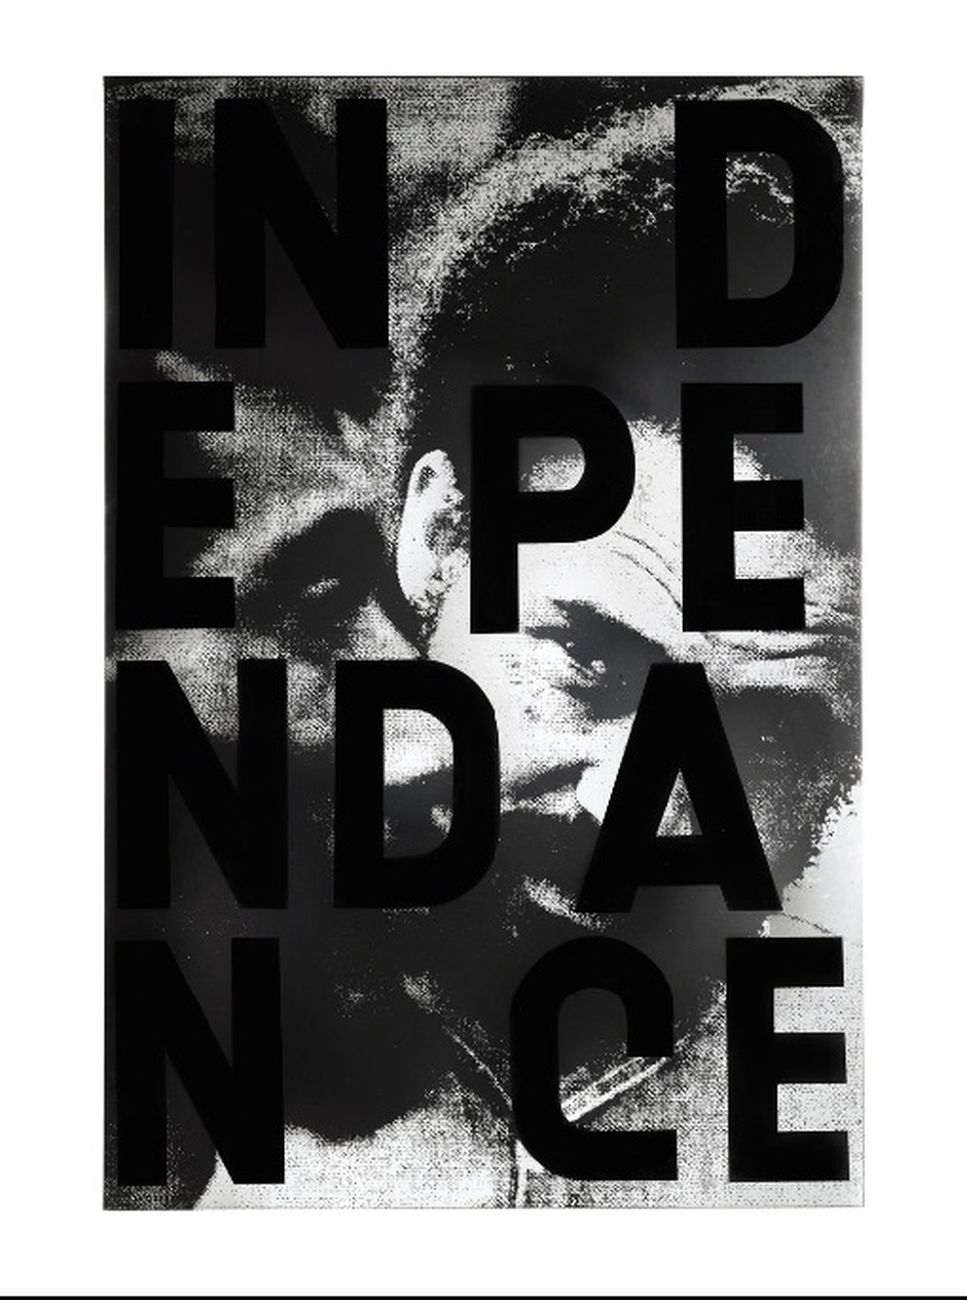 Adam Pendleton, Independance (Harvest 3000 Years), 2014-15